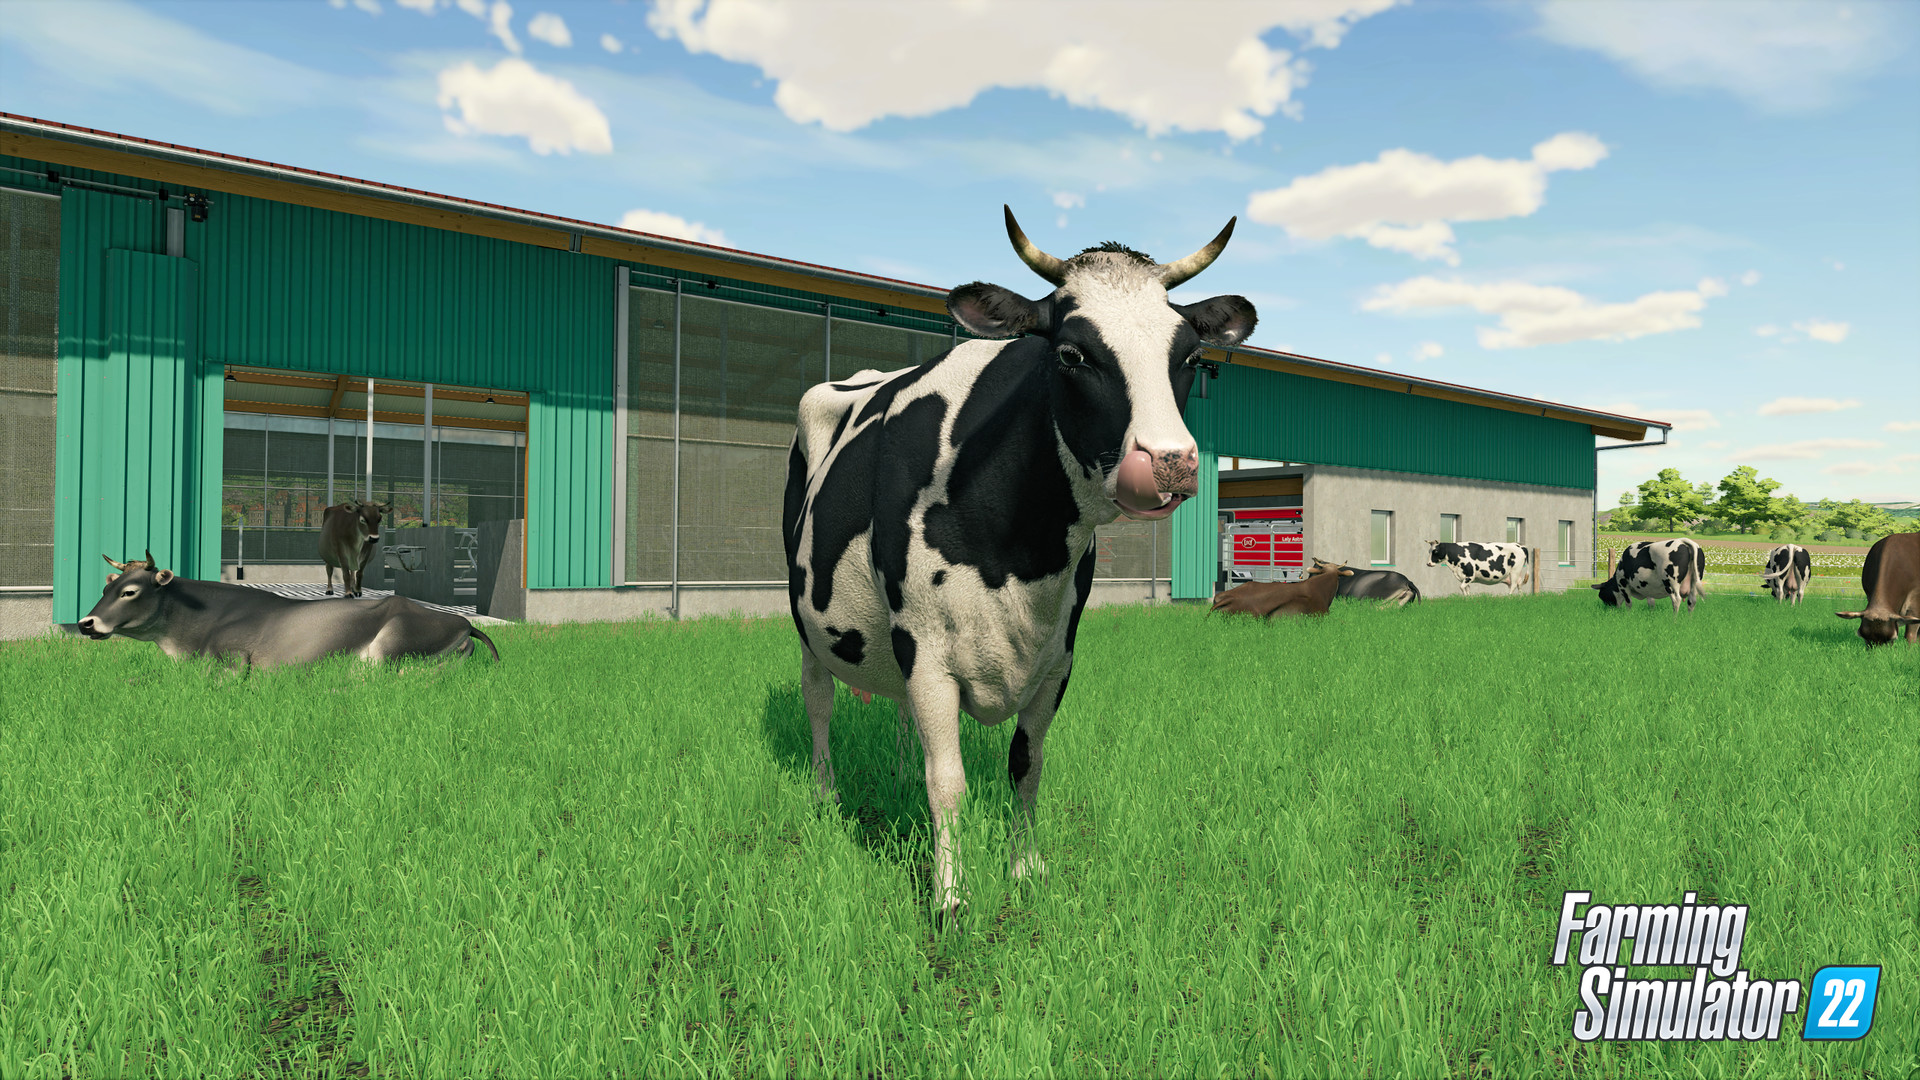 Farming Simulator 22 Epic Games Account